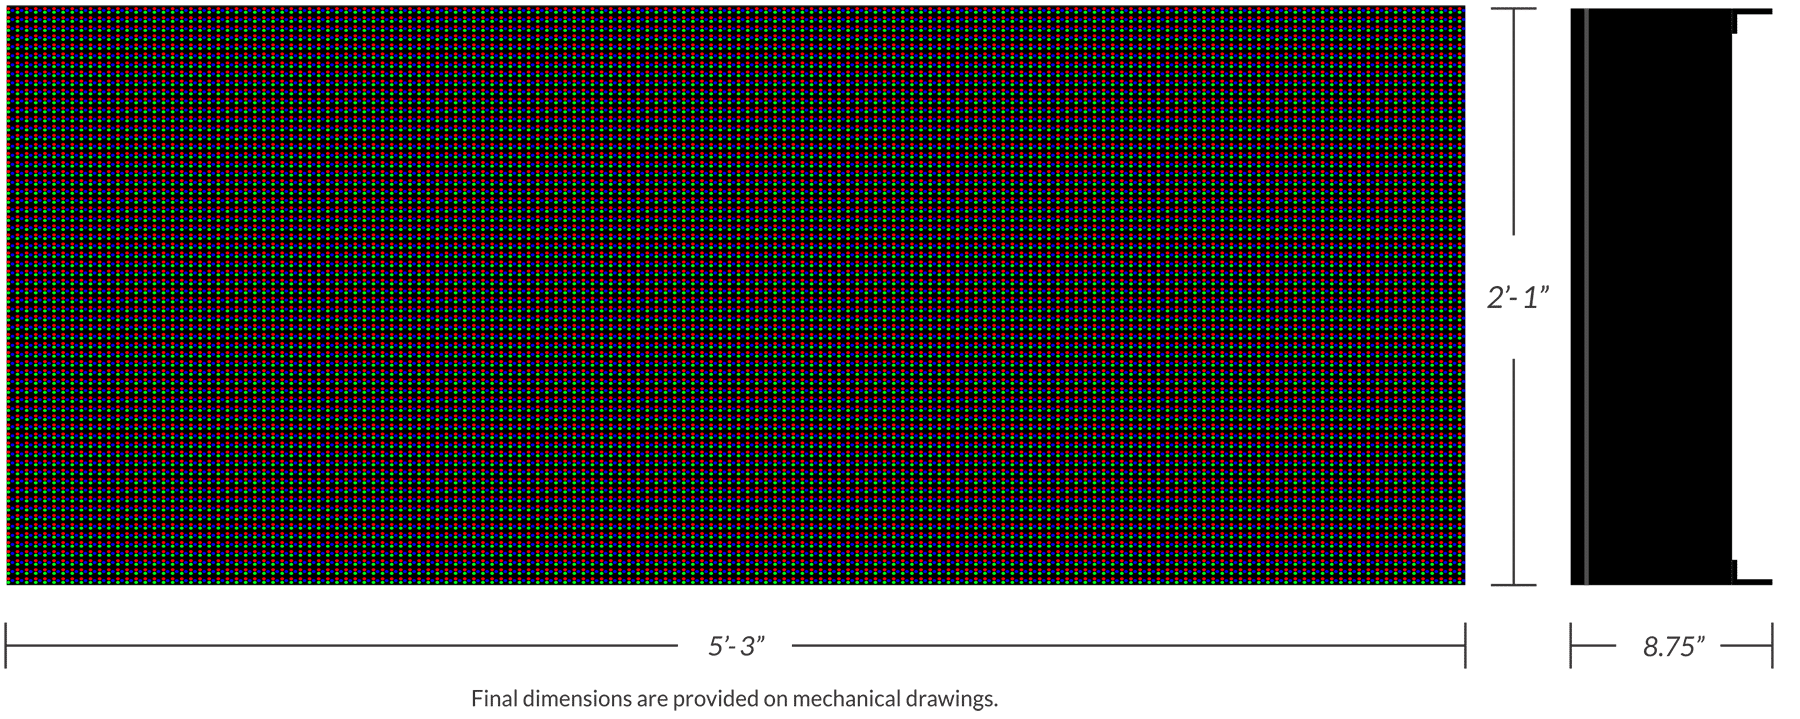 64x160 High Resolution Panel